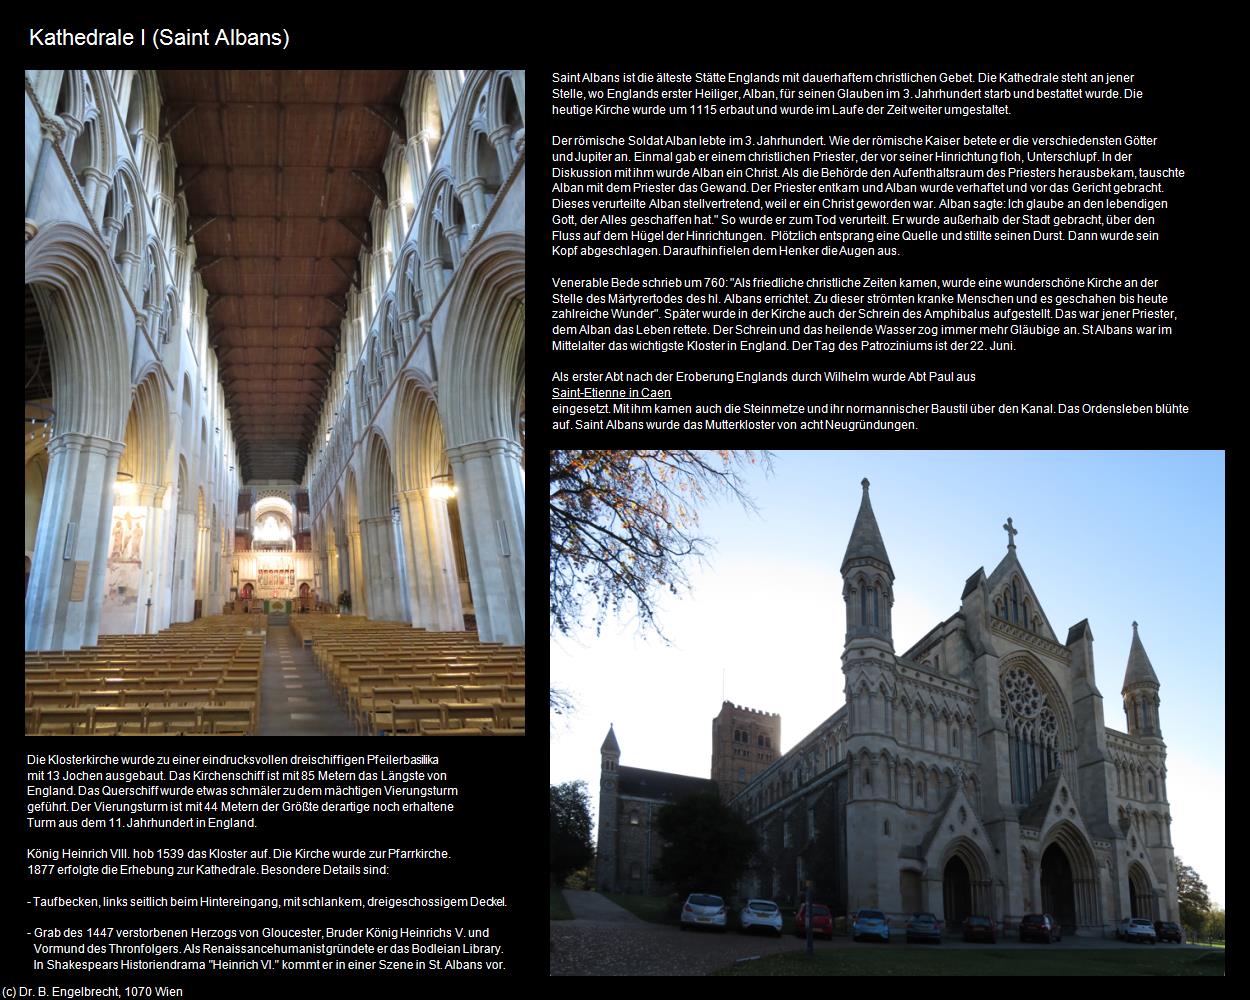 Kathedrale I (Saint Albans, England) in Kulturatlas-ENGLAND und WALES(c)B.Engelbrecht